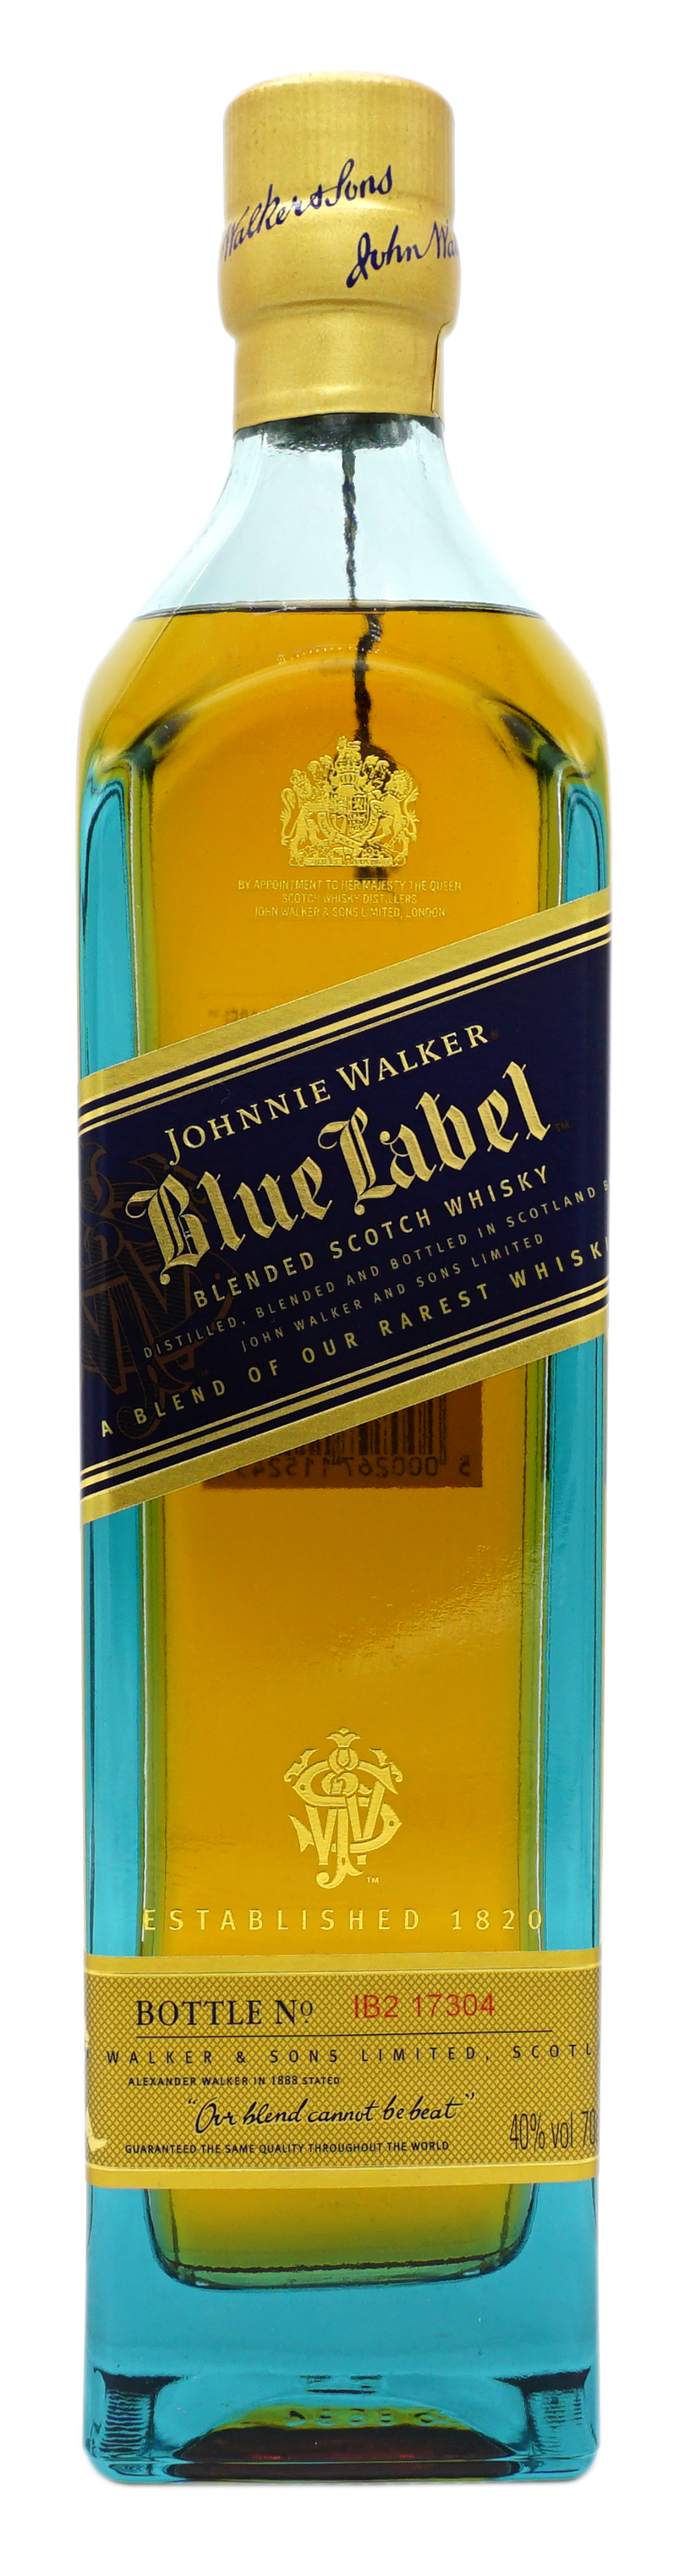 JohnnieWalker BlueLabel 40% Fles